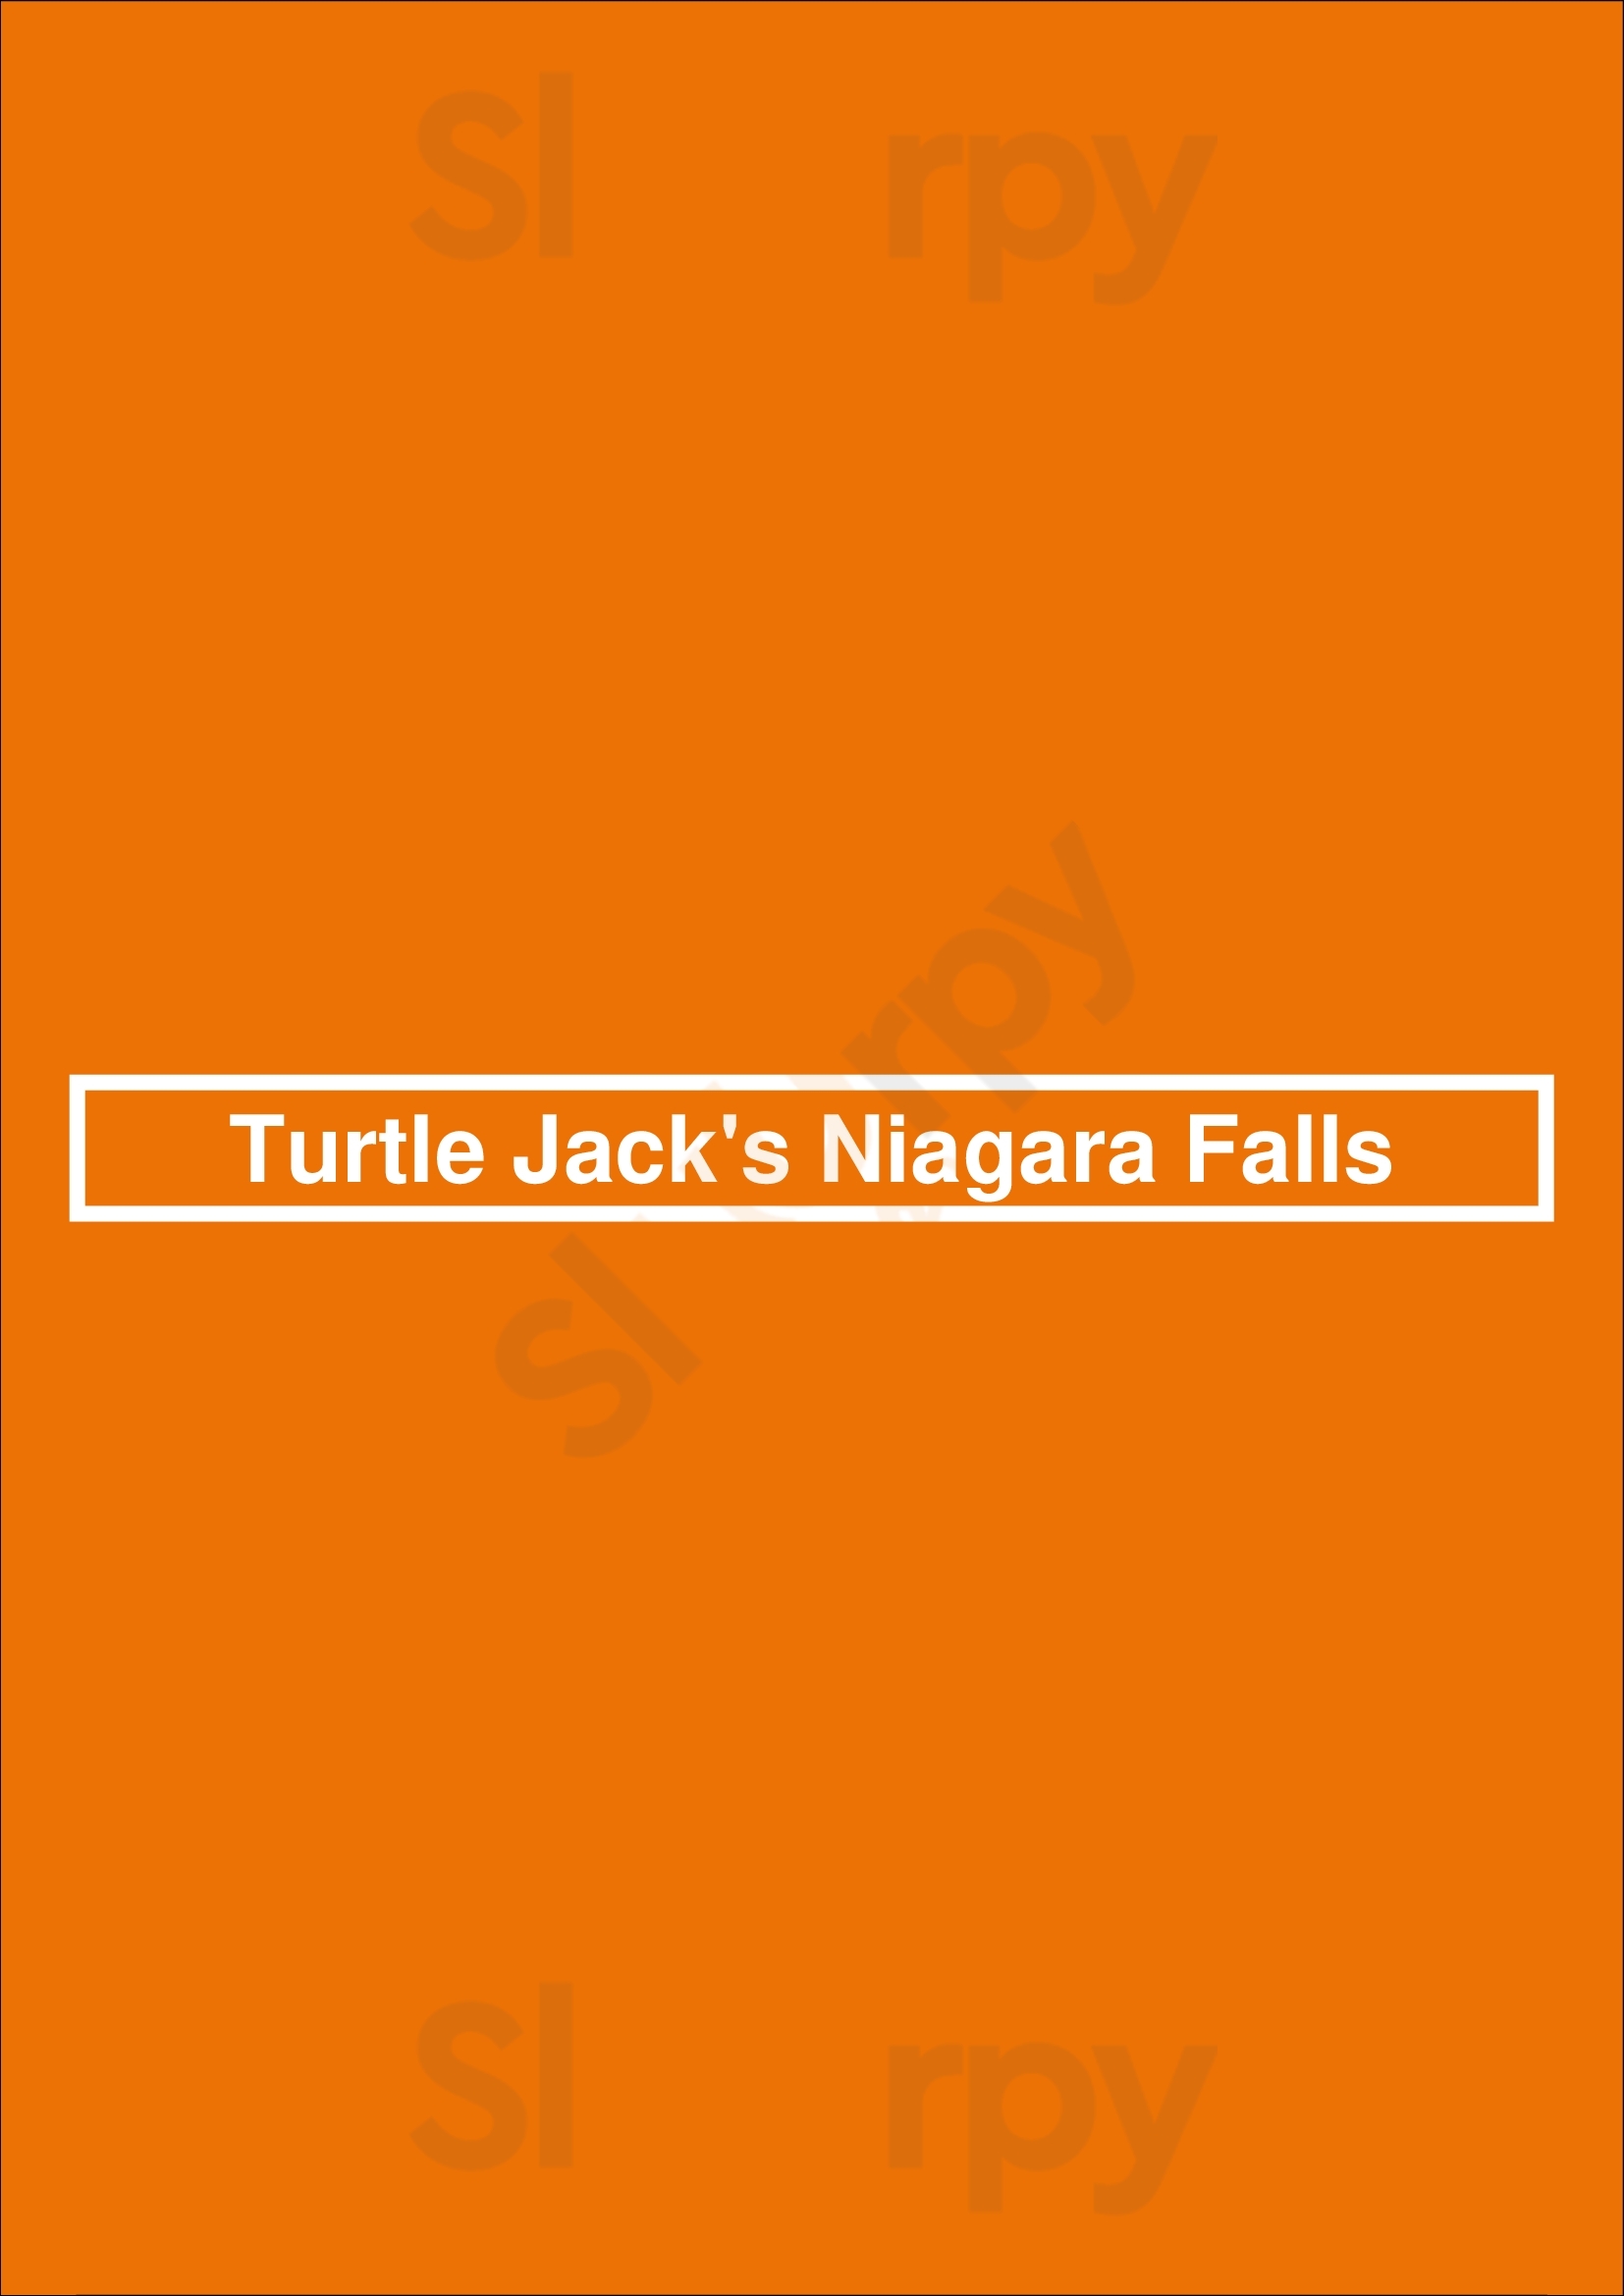 Turtle Jack's Niagara Falls Niagara Falls Menu - 1